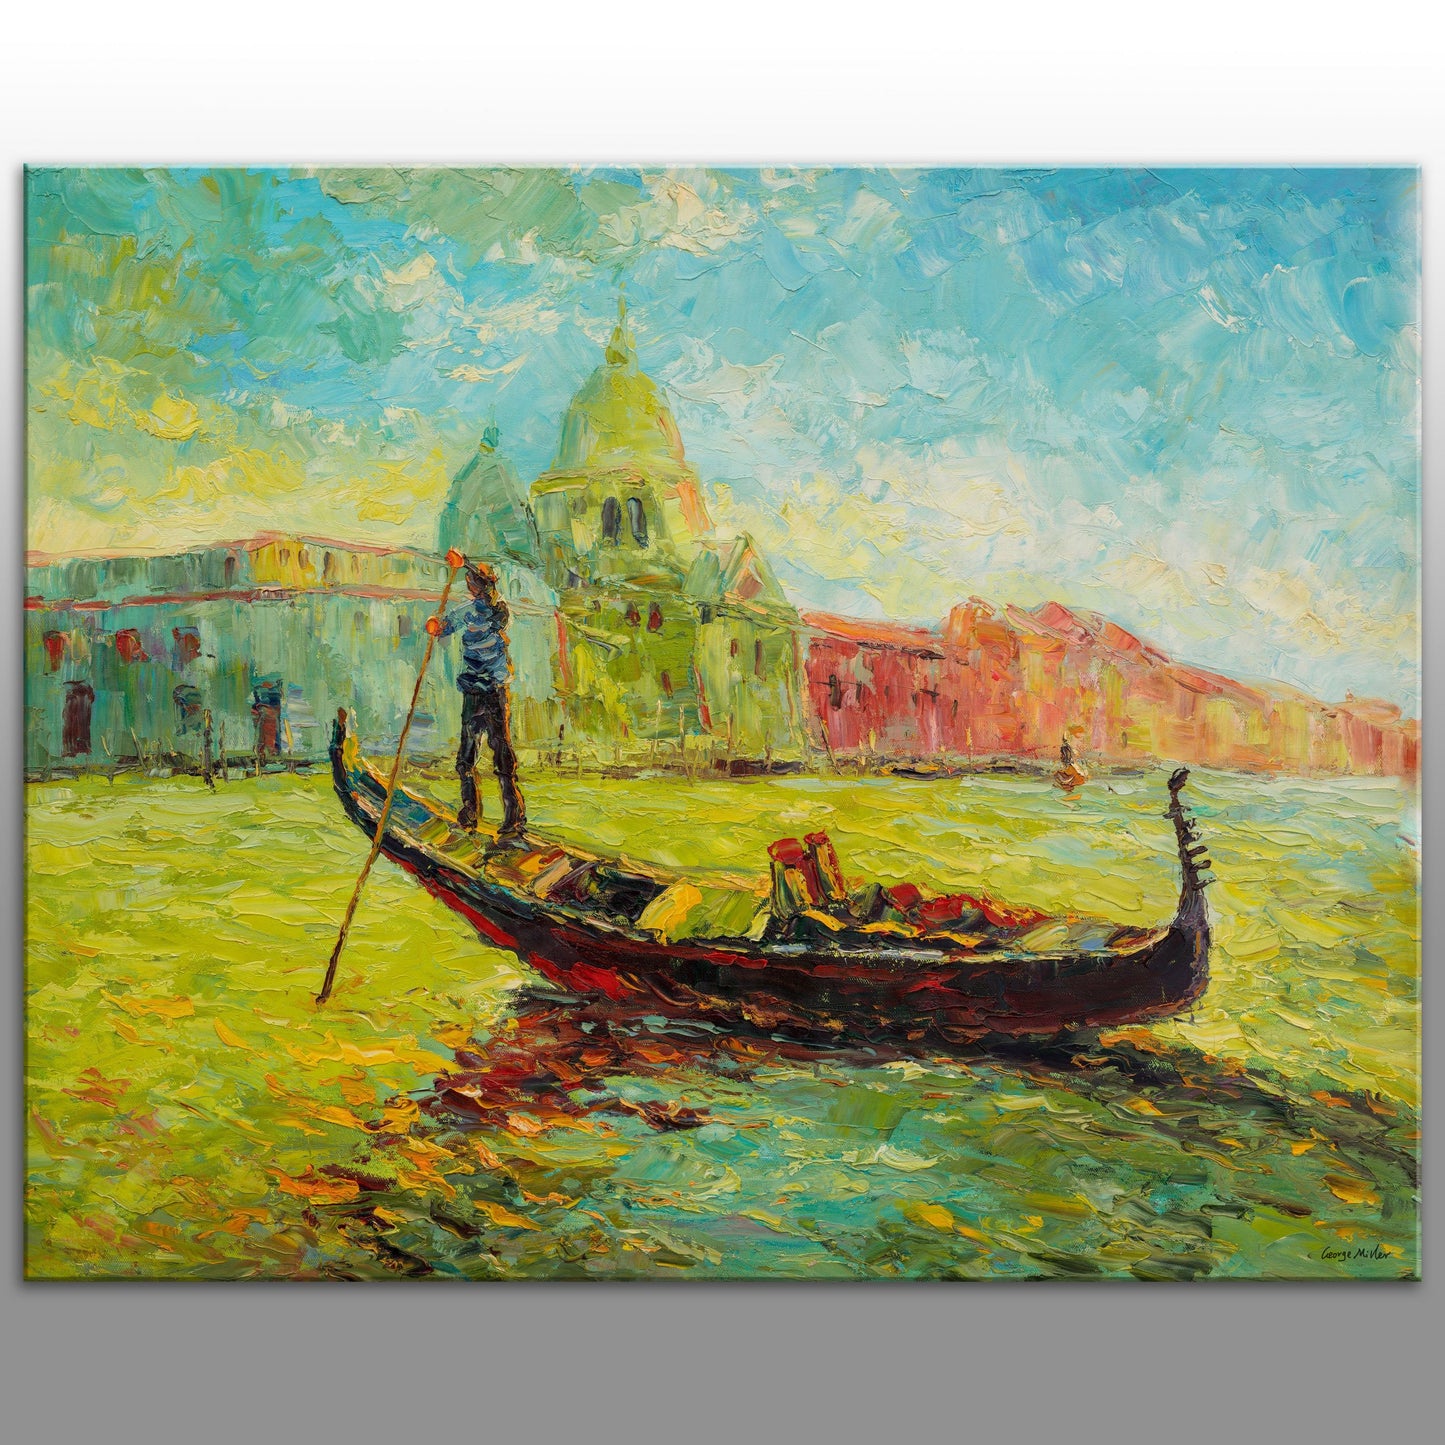 Italian Venice Oil Painting, Gondola, Palette Knife Painting, Abstract Canvas Painting, Original Landscape Oil Paintings, Large Art